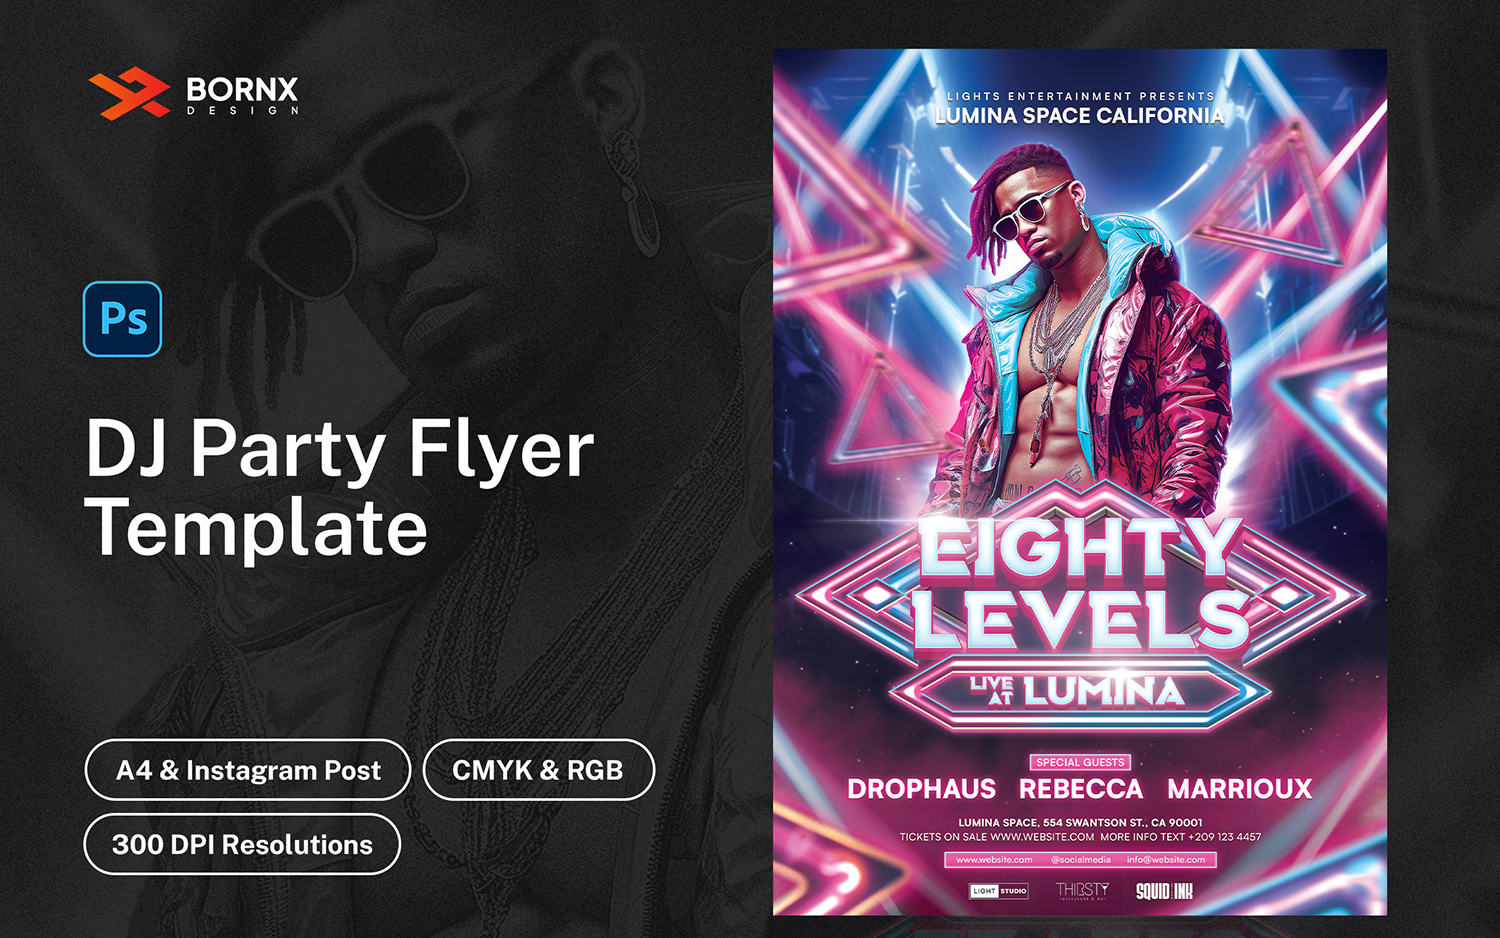 DJ Party Flyer Template PSD